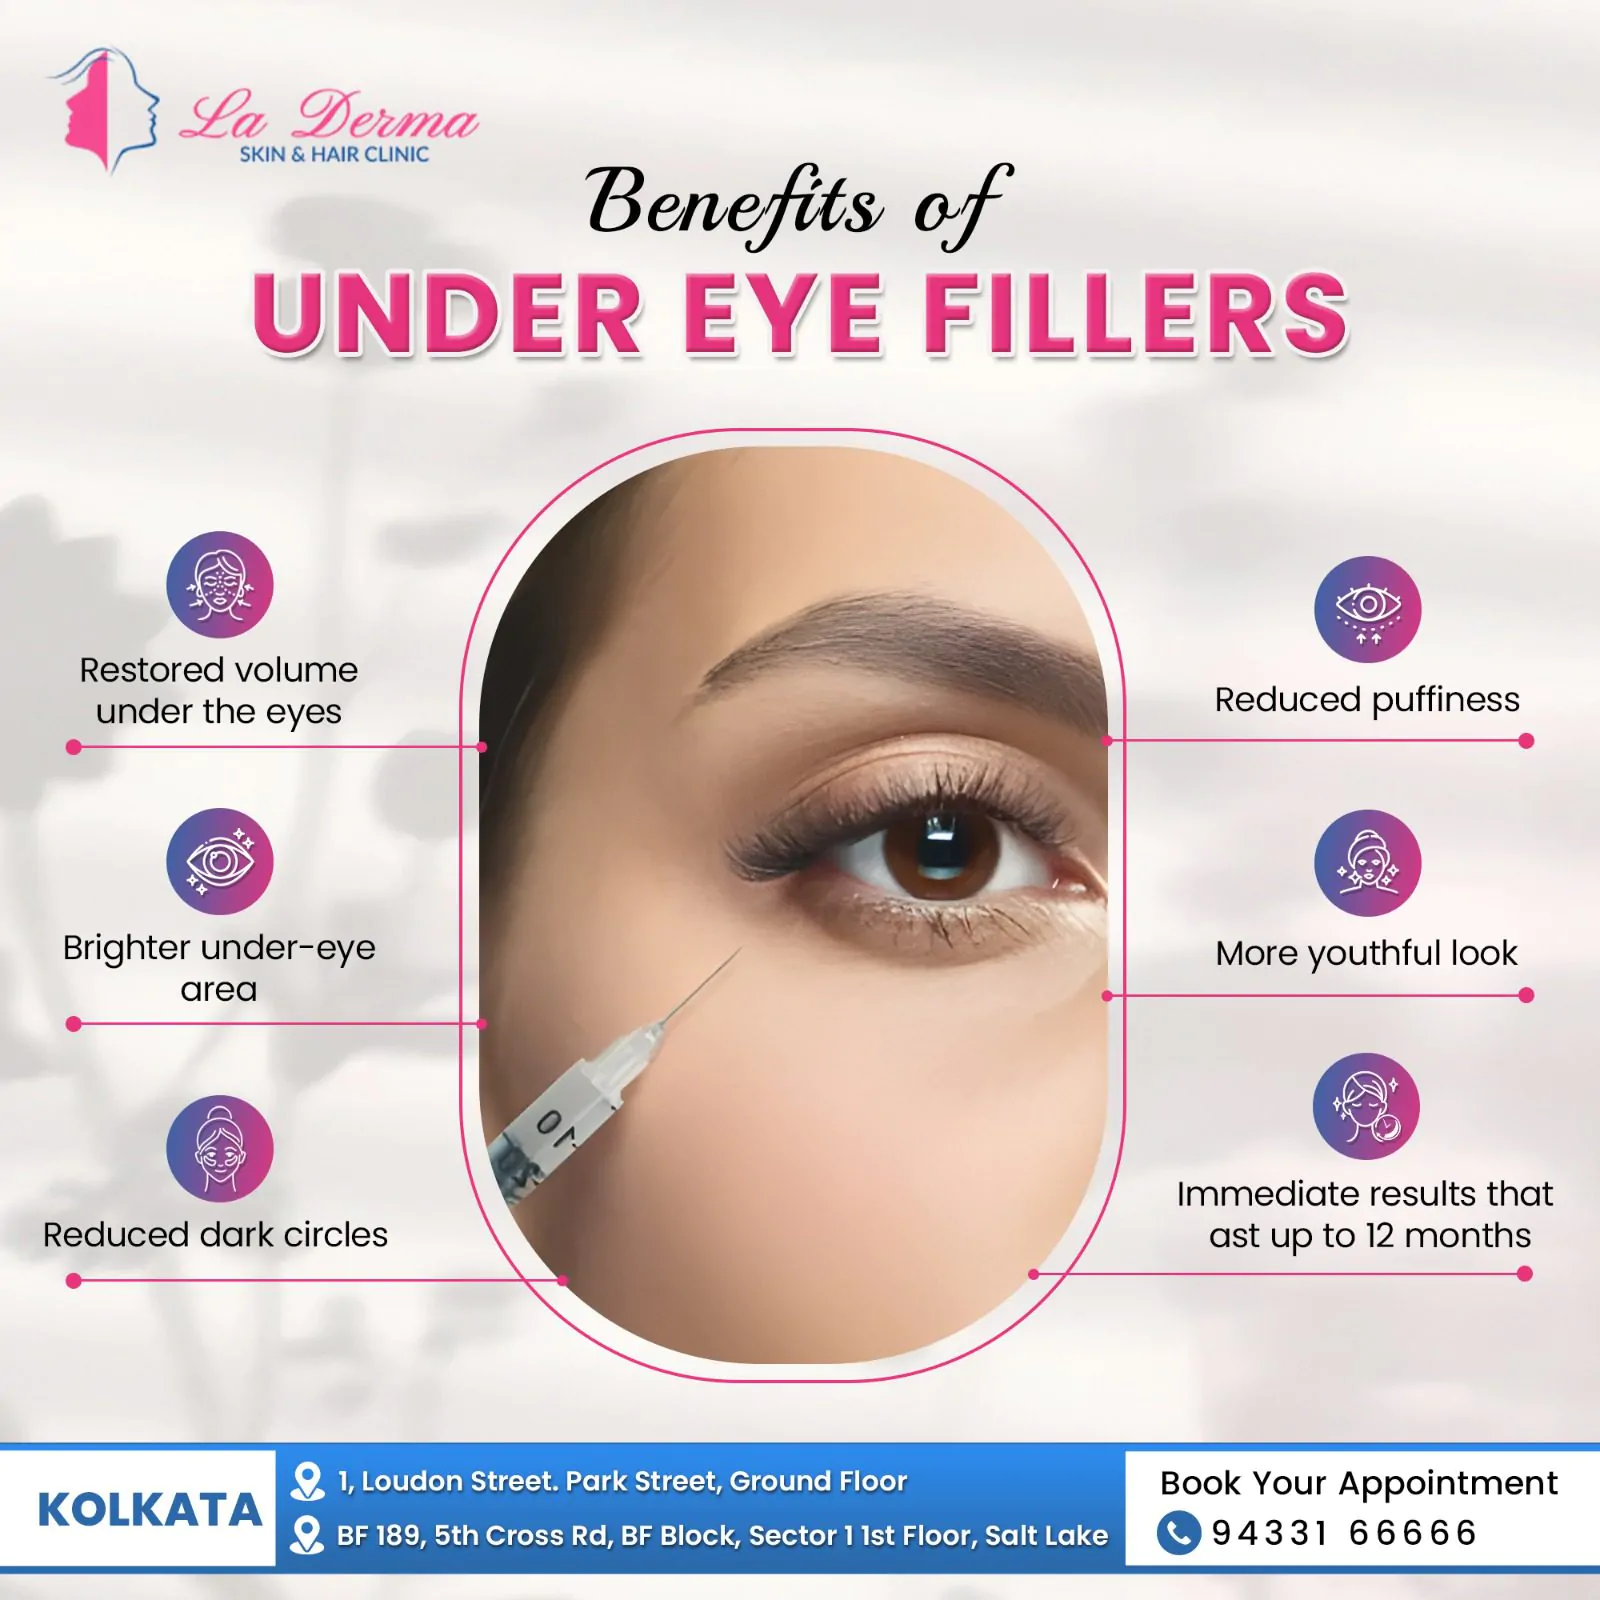 Benefits of Under Eye Fillers!